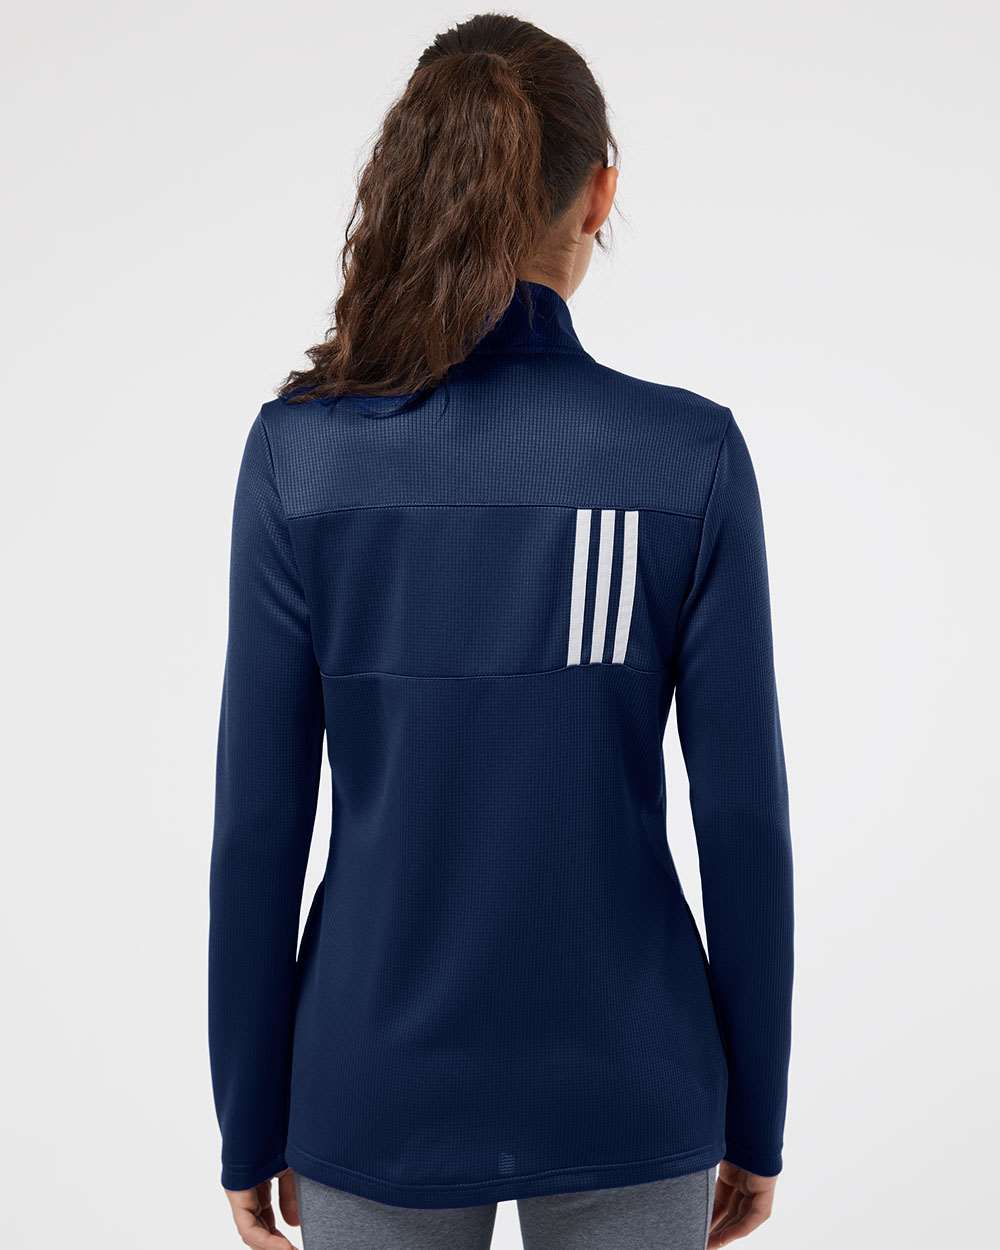 Adidas - Women's 3-Stripes Double Knit Full-Zip - A483